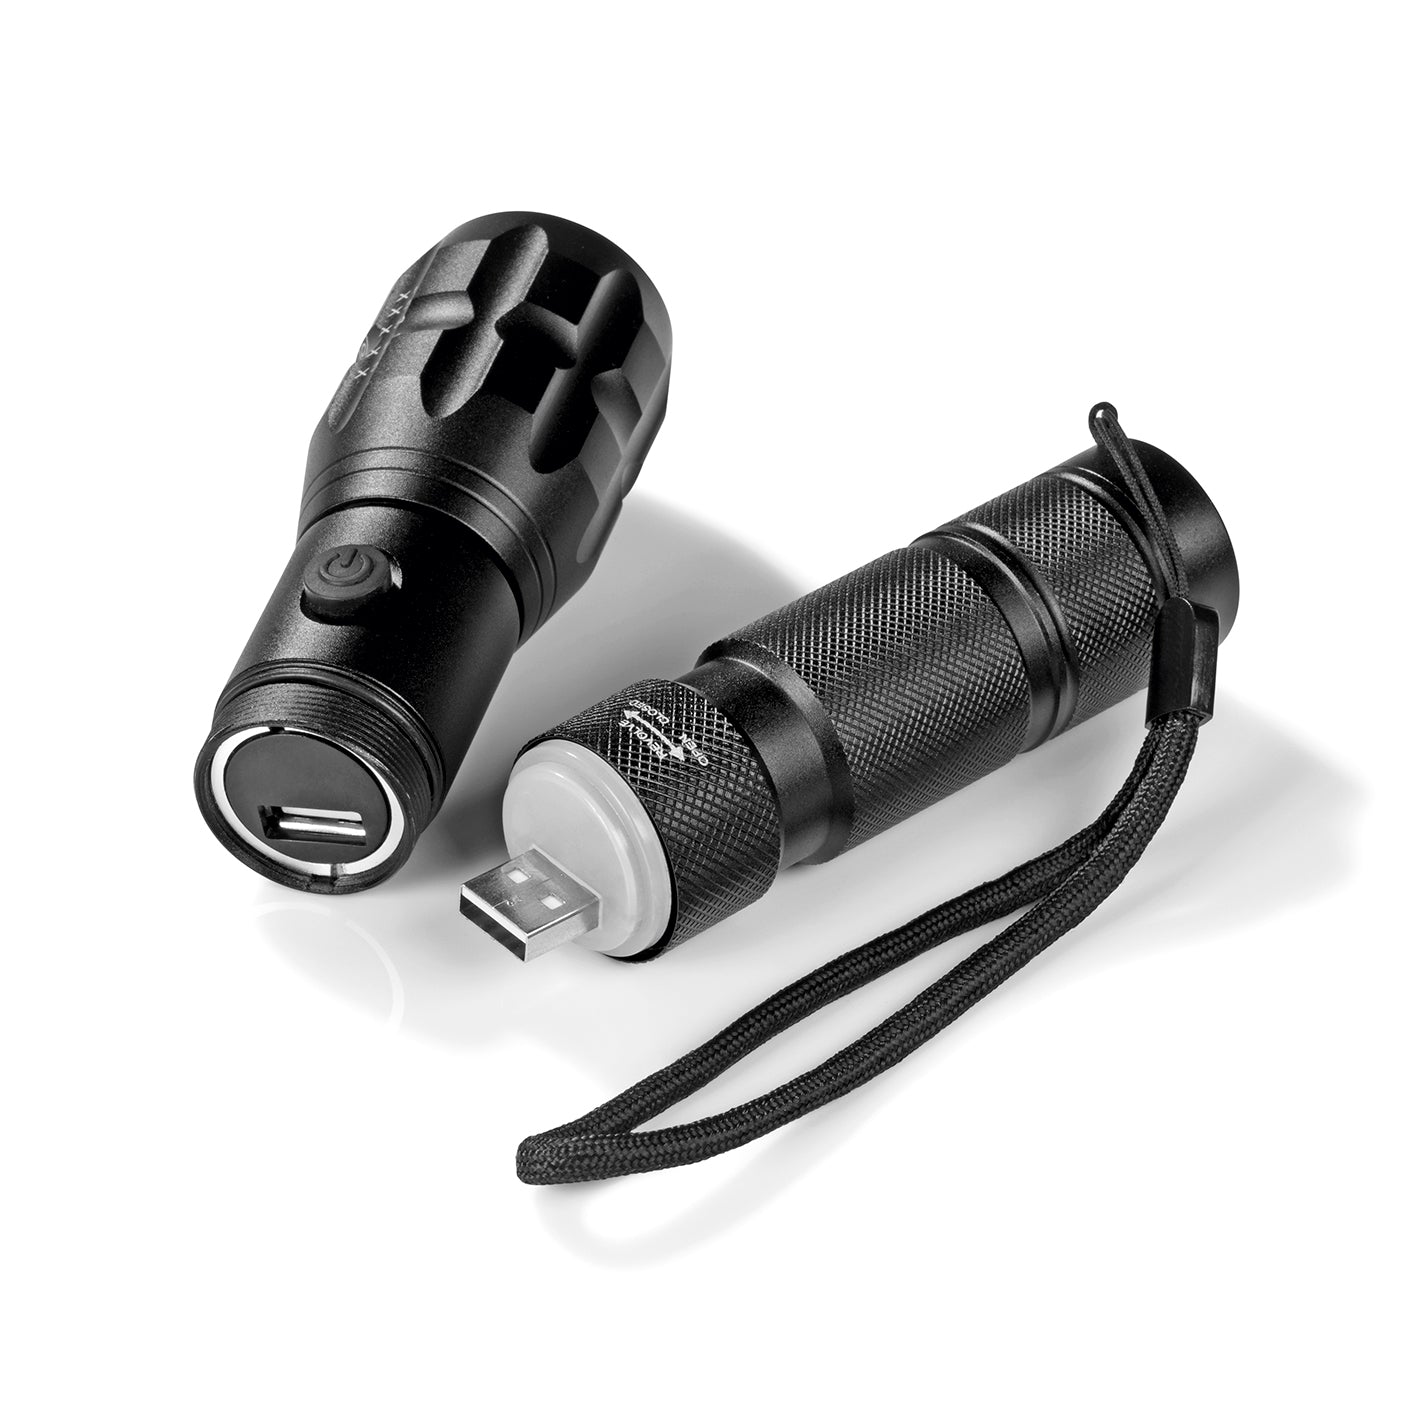 Power-Taschenlampe 3,7V schwarz - 2er-Set